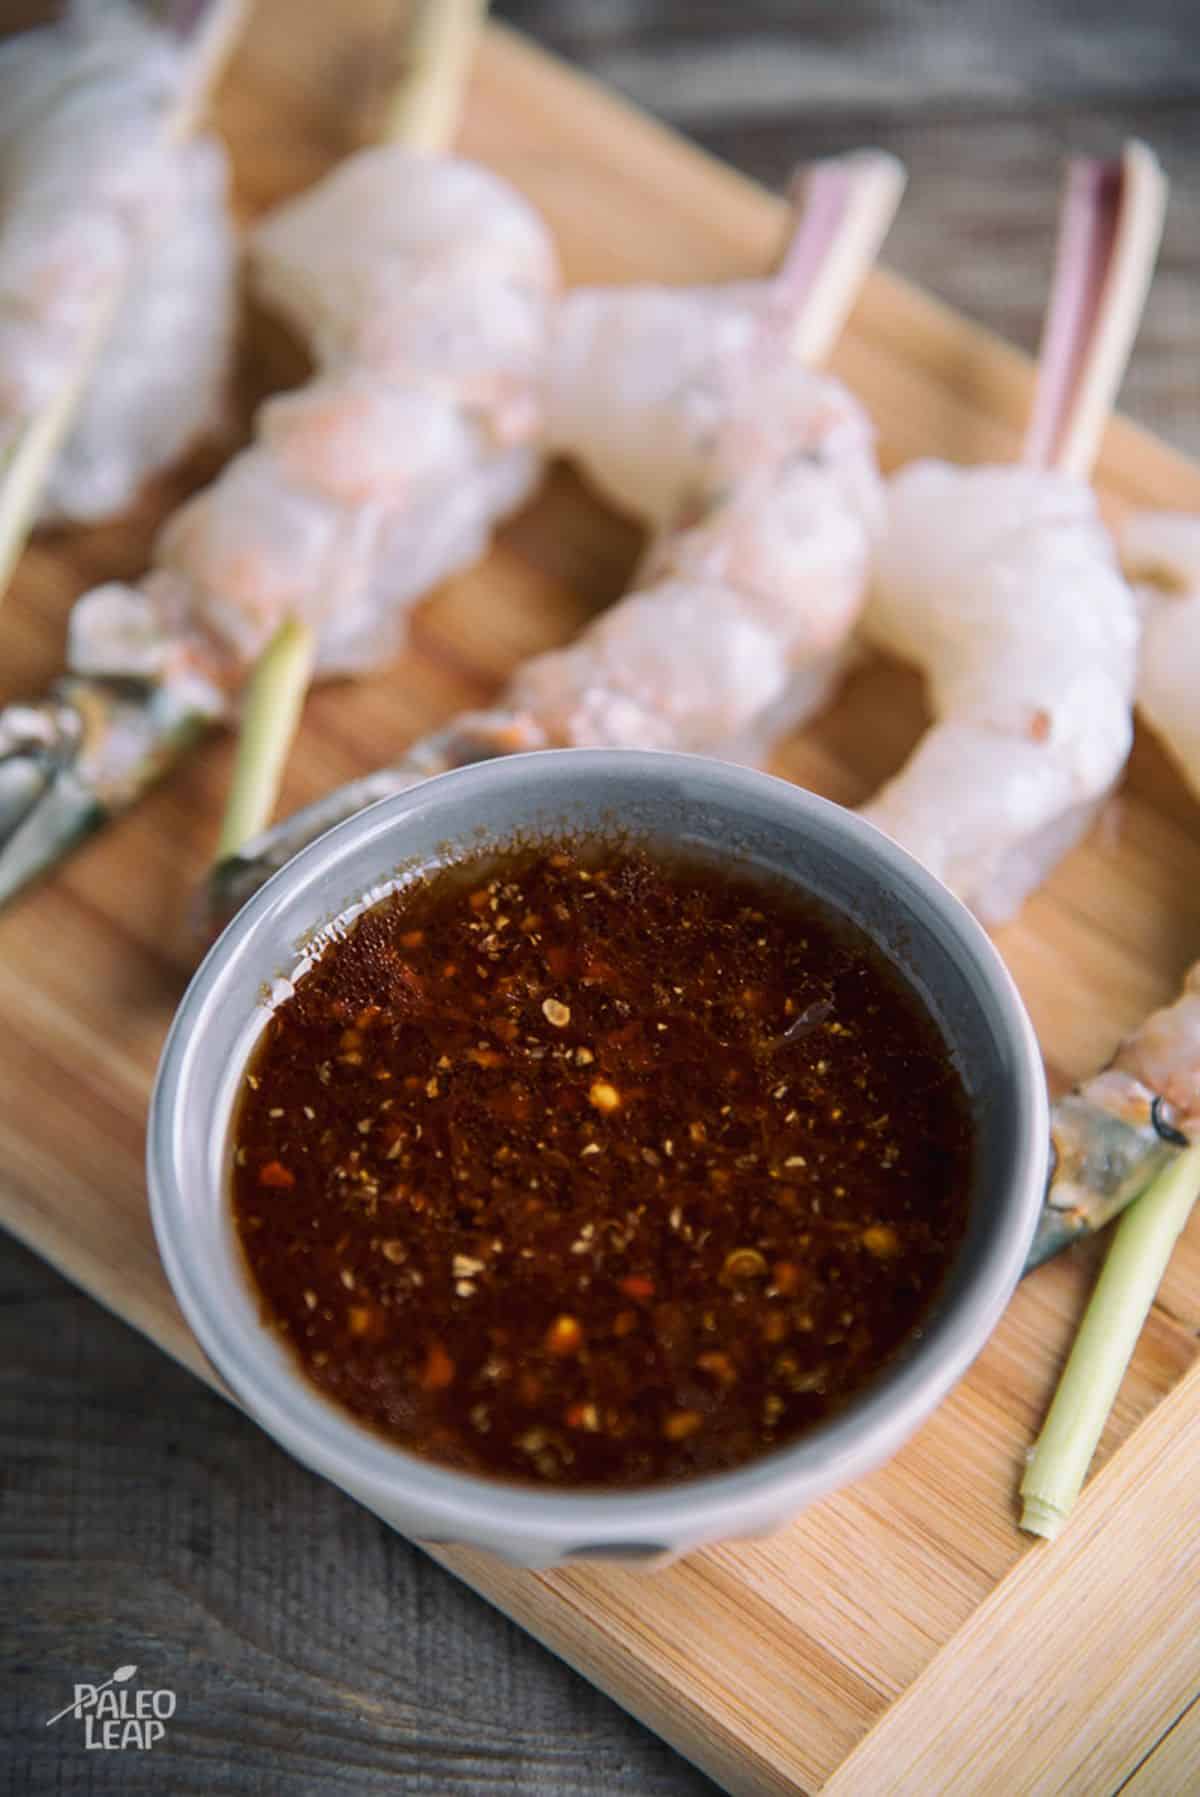 Lemongrass-Skewered Spicy Shrimp Recipe Preparation